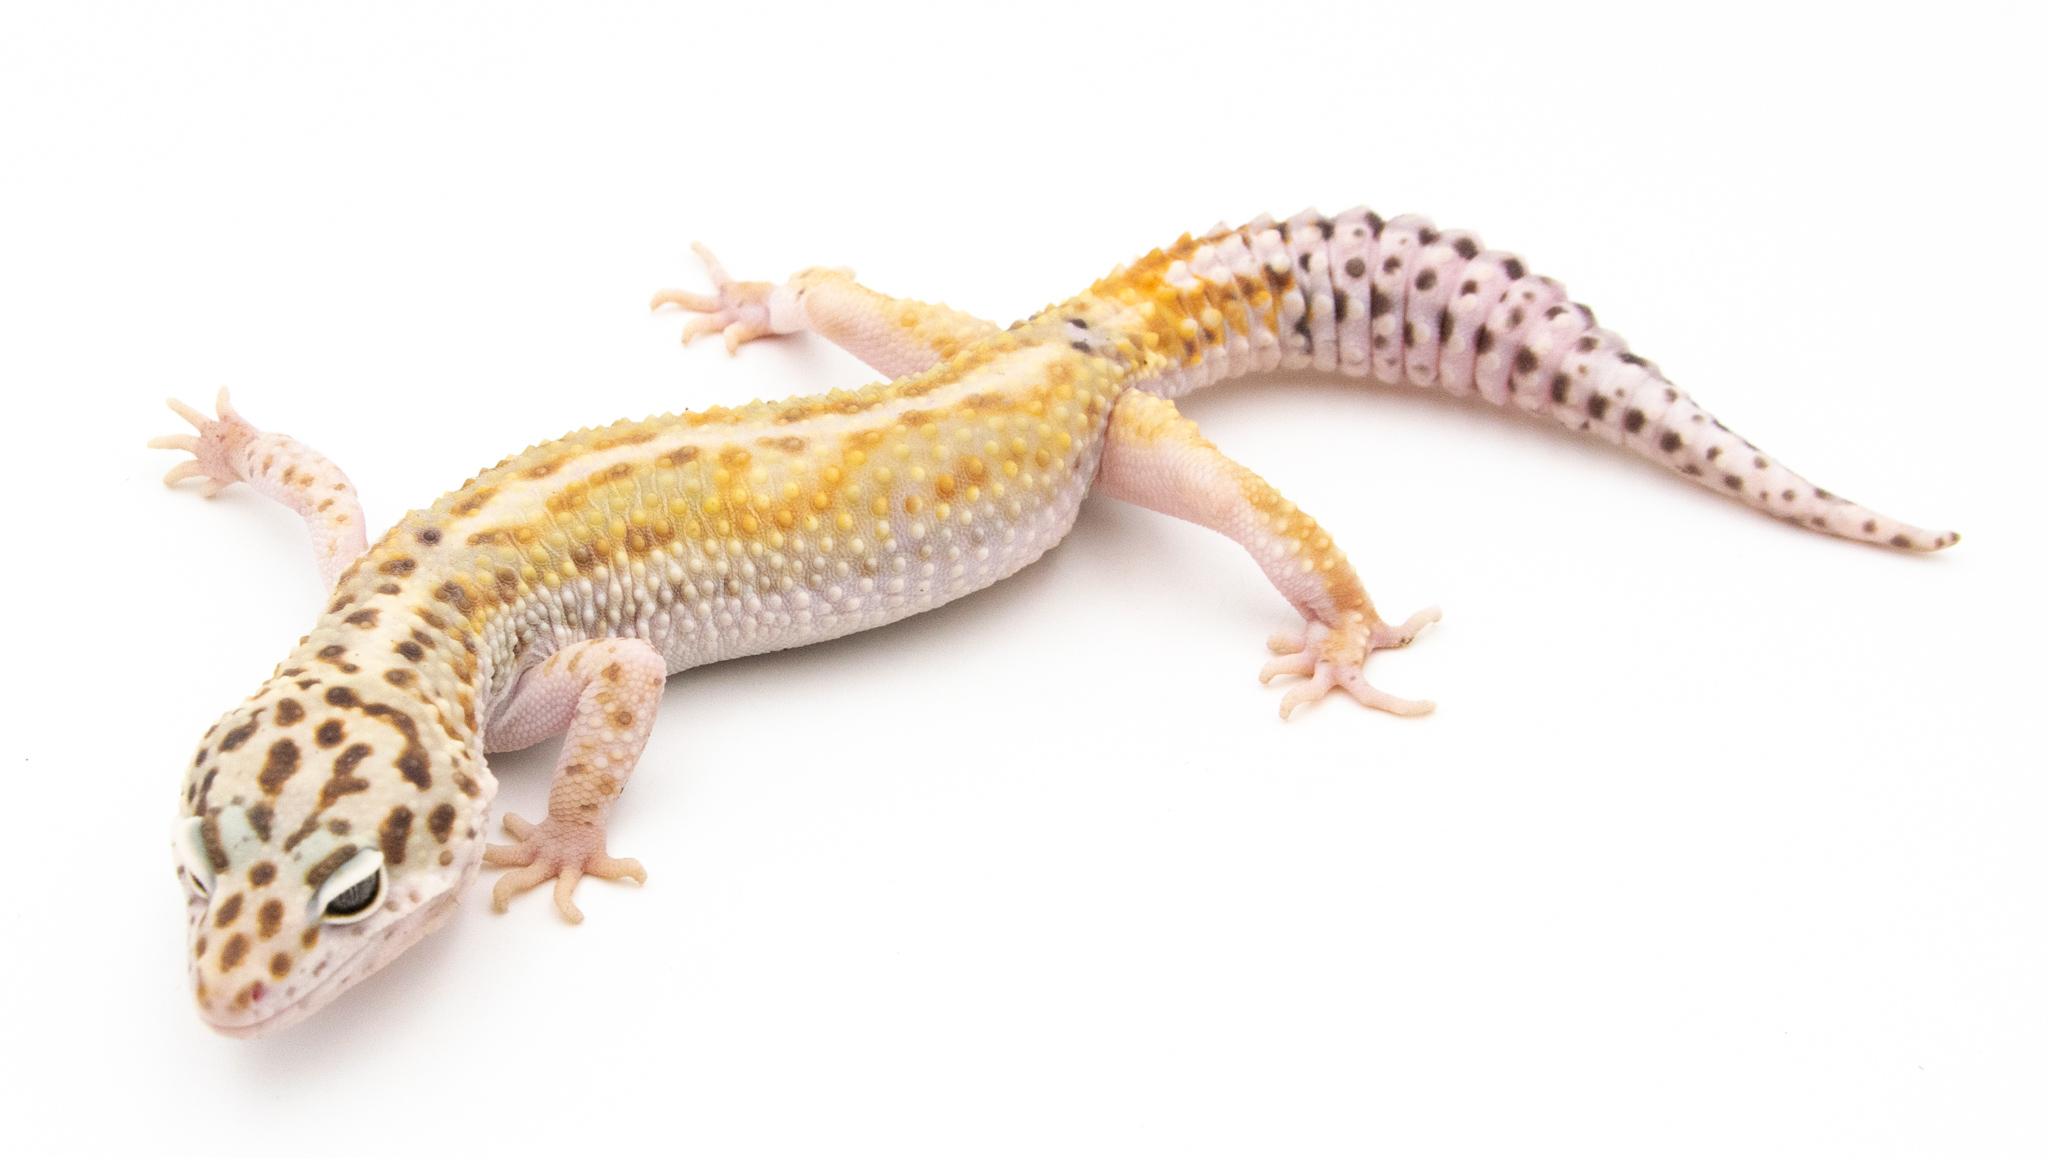 EJ171 - Gecko Léopard - Eublepharis Macularius stripe - &#9794; - NC 2021